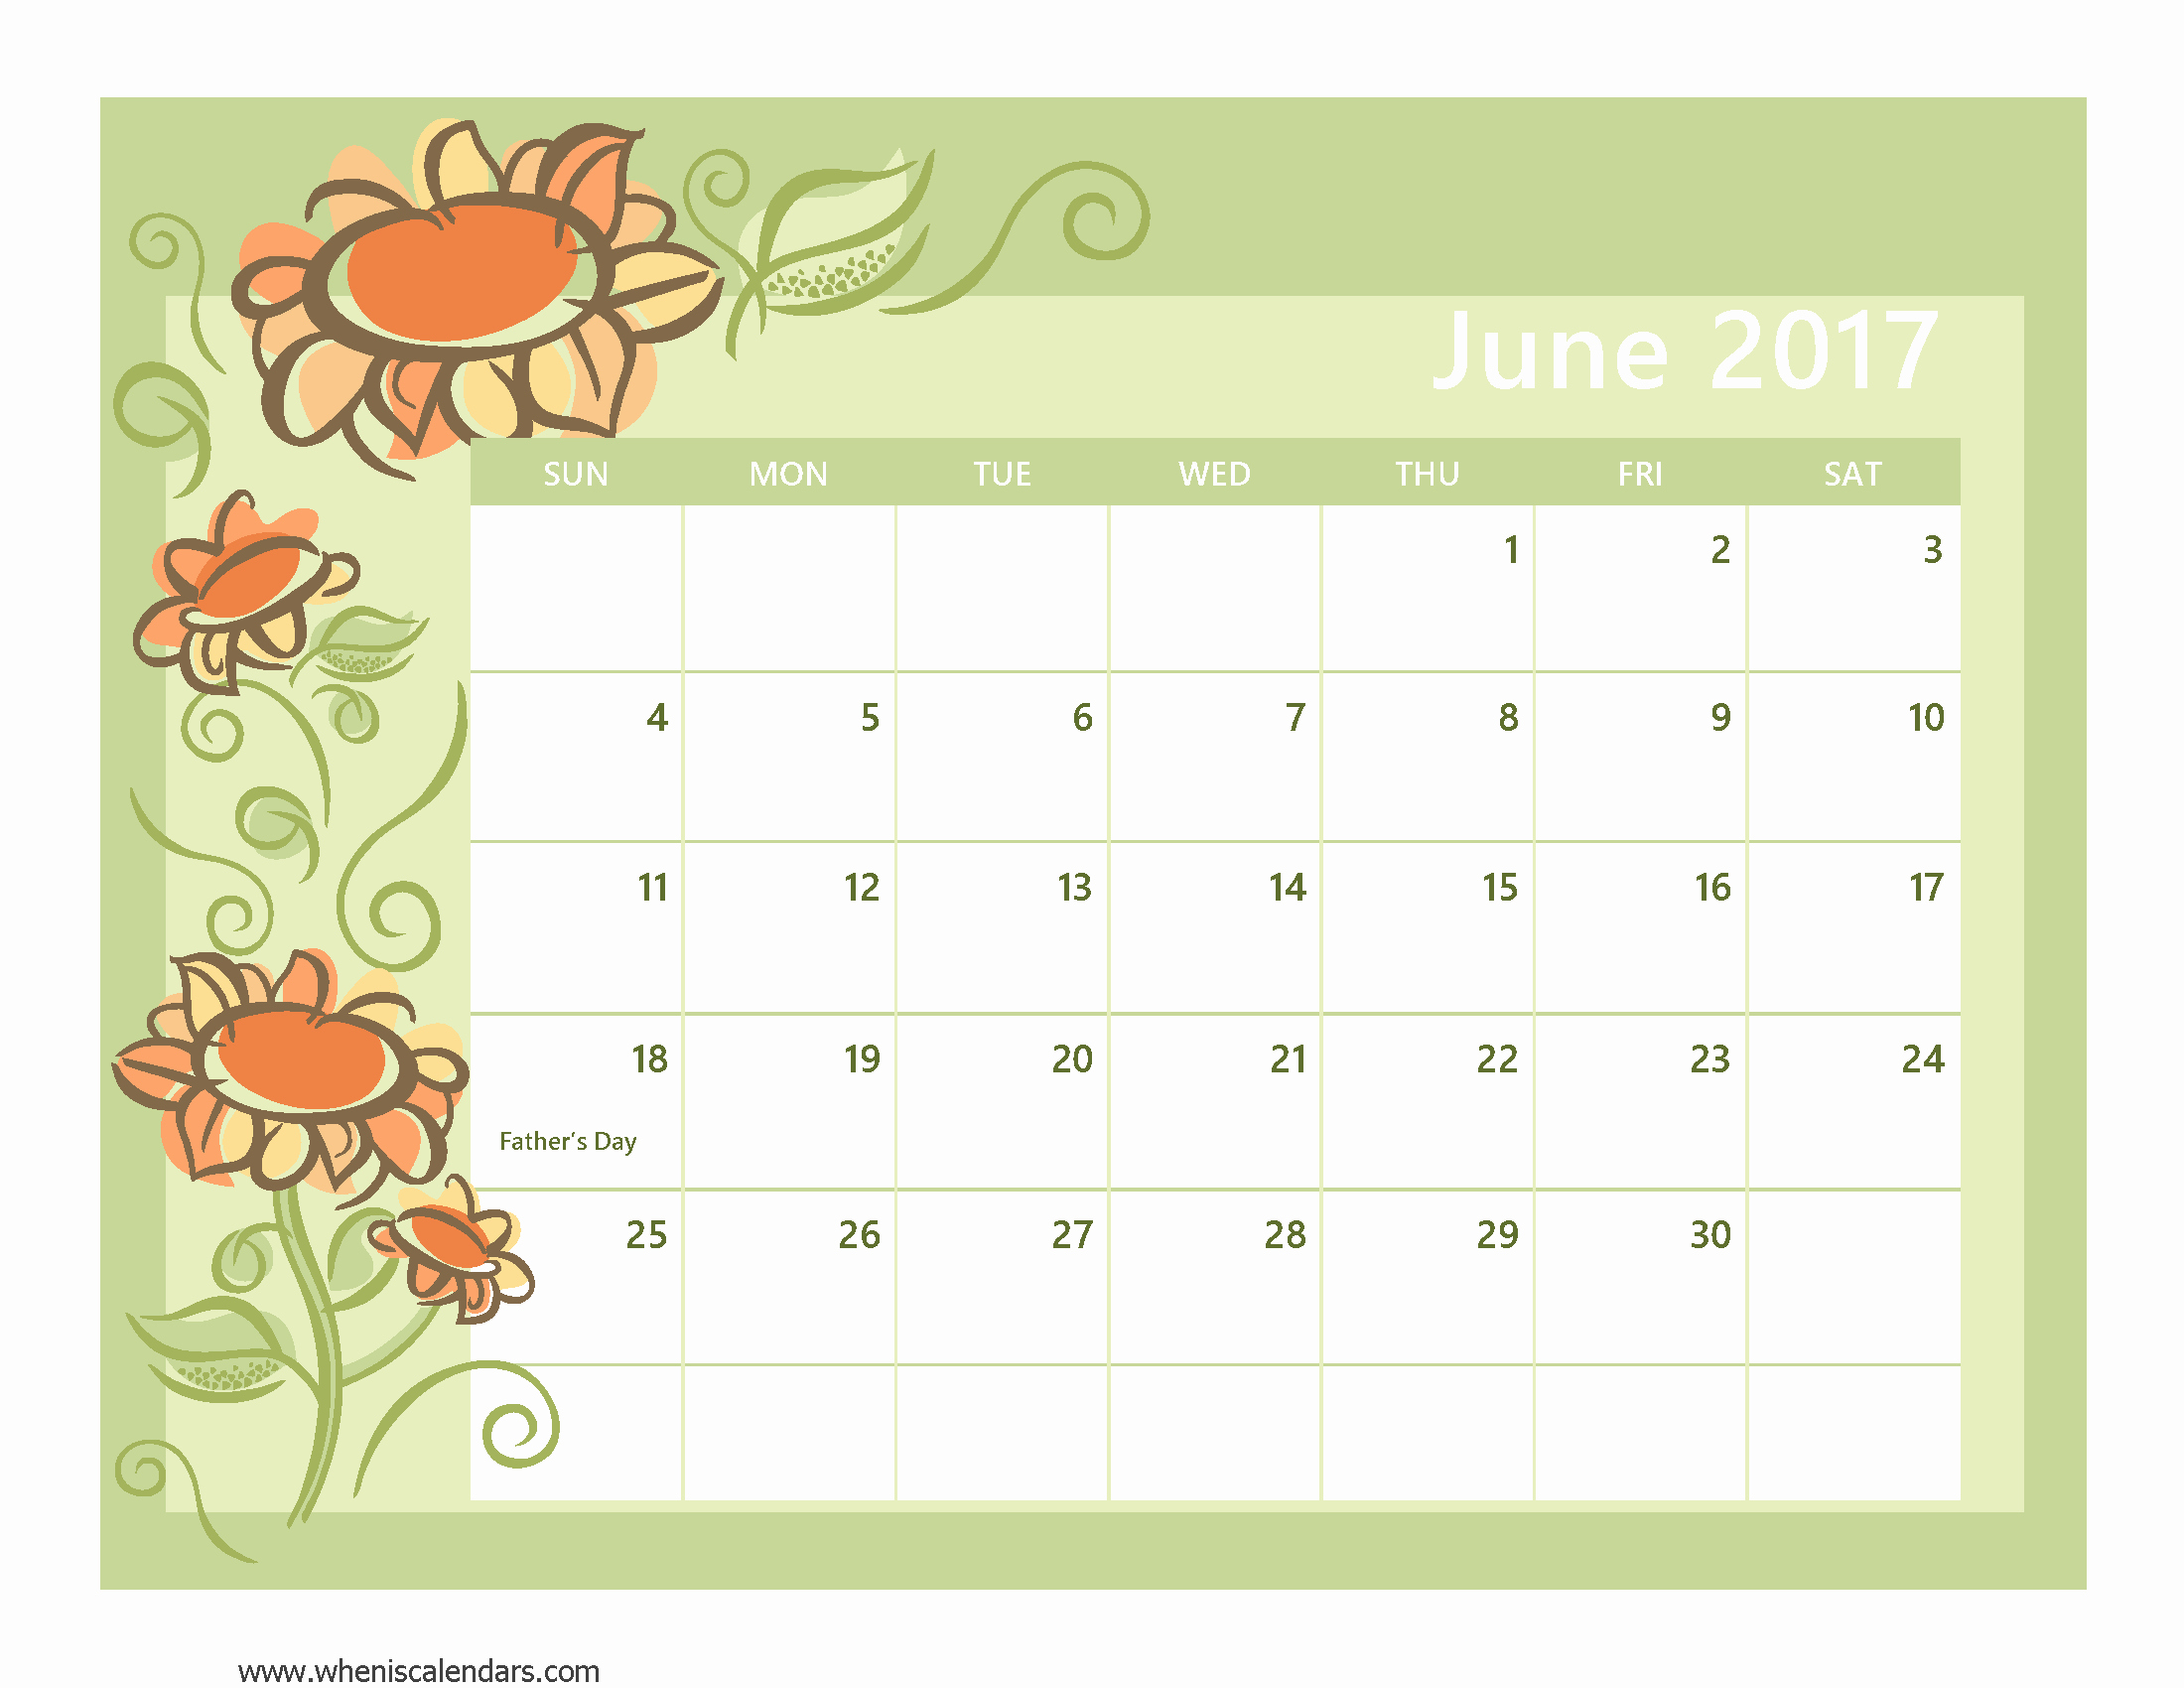 2017 Quarterly Calendar Template Excel Lovely June 2017 Calendar Template